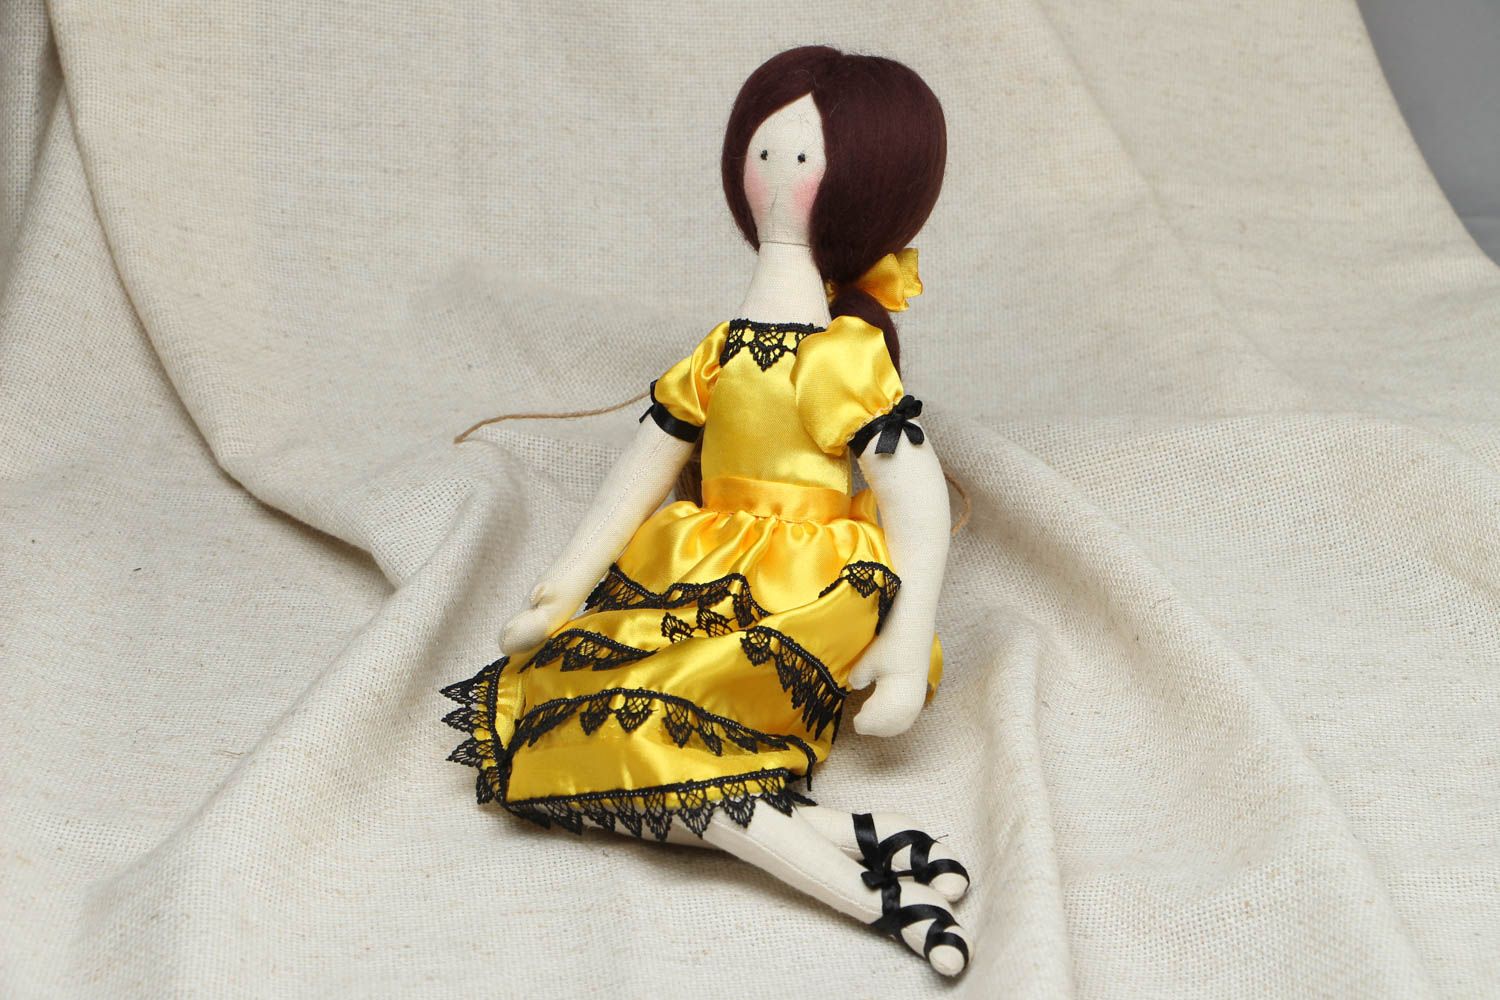 Handmade doll sewn of natural fabrics photo 1